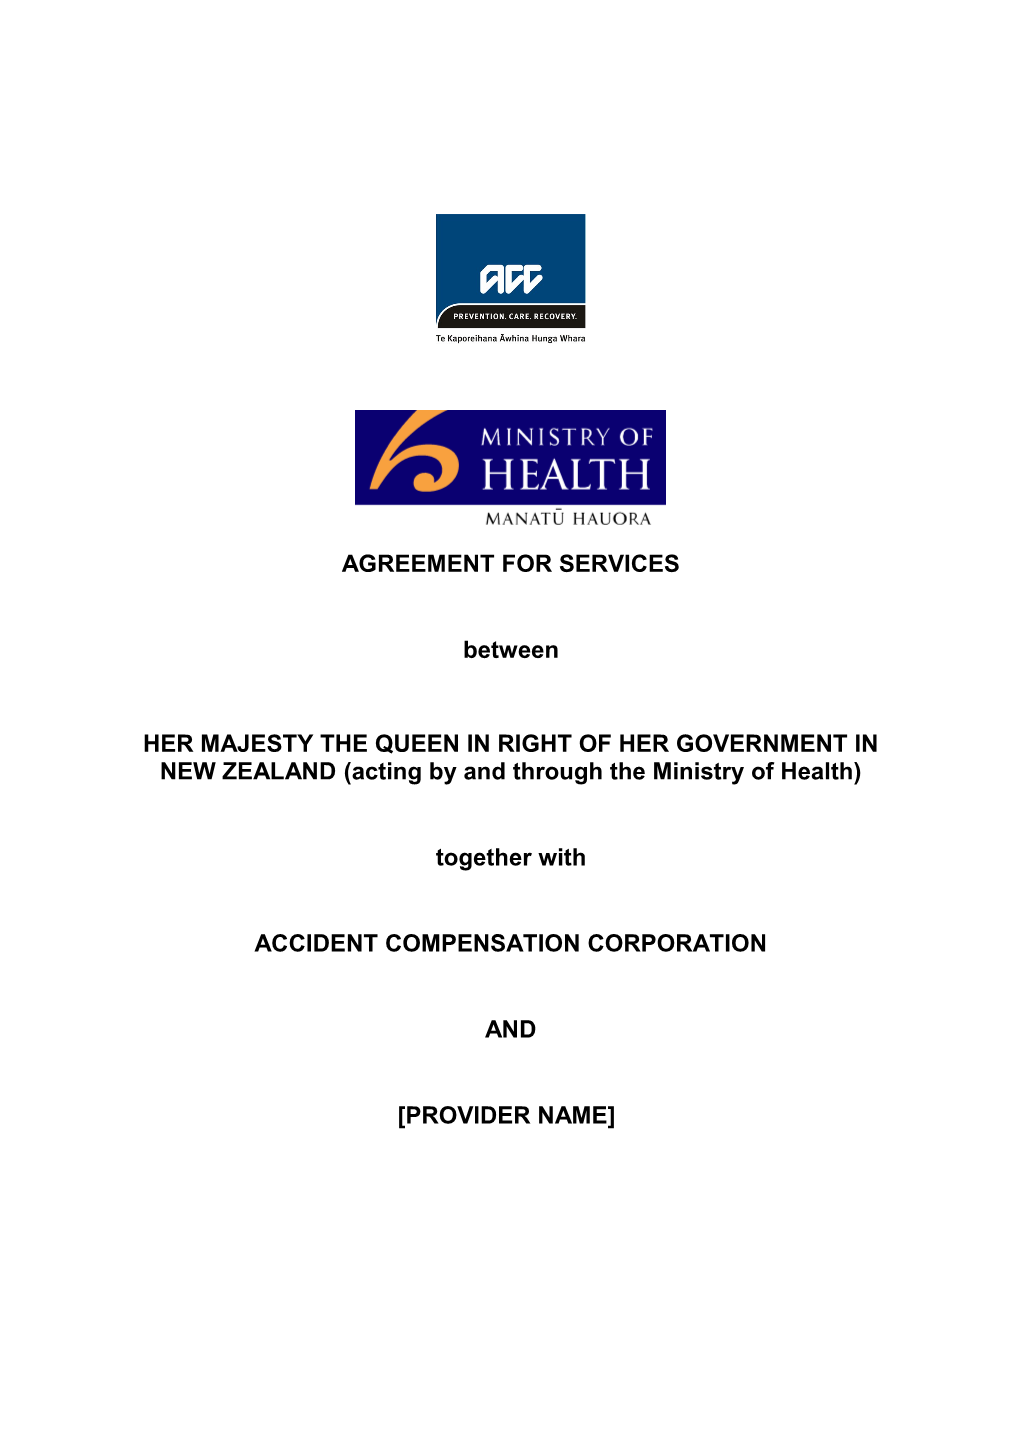 Emergency Air Ambulance Service - Service Agreement